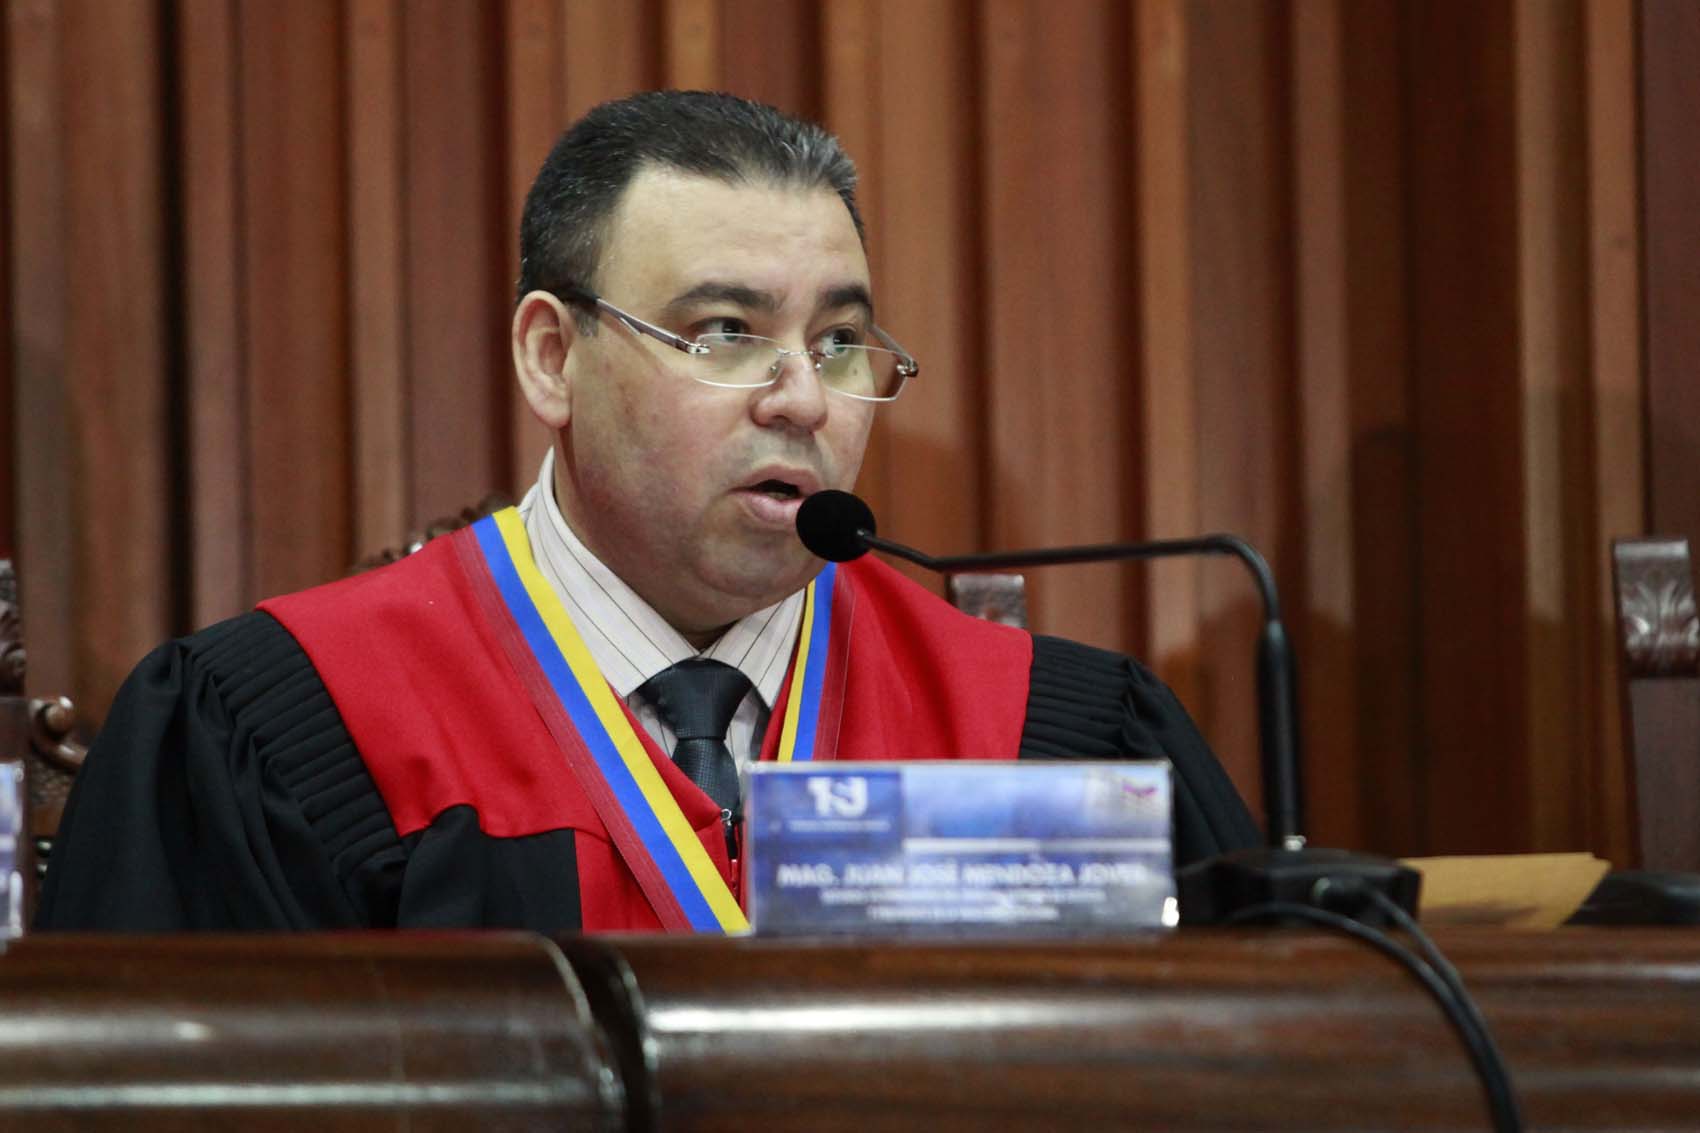 TSJ de Maduro pretende “verificar” cuál es la Junta Directiva legítima de la Asamblea Nacional